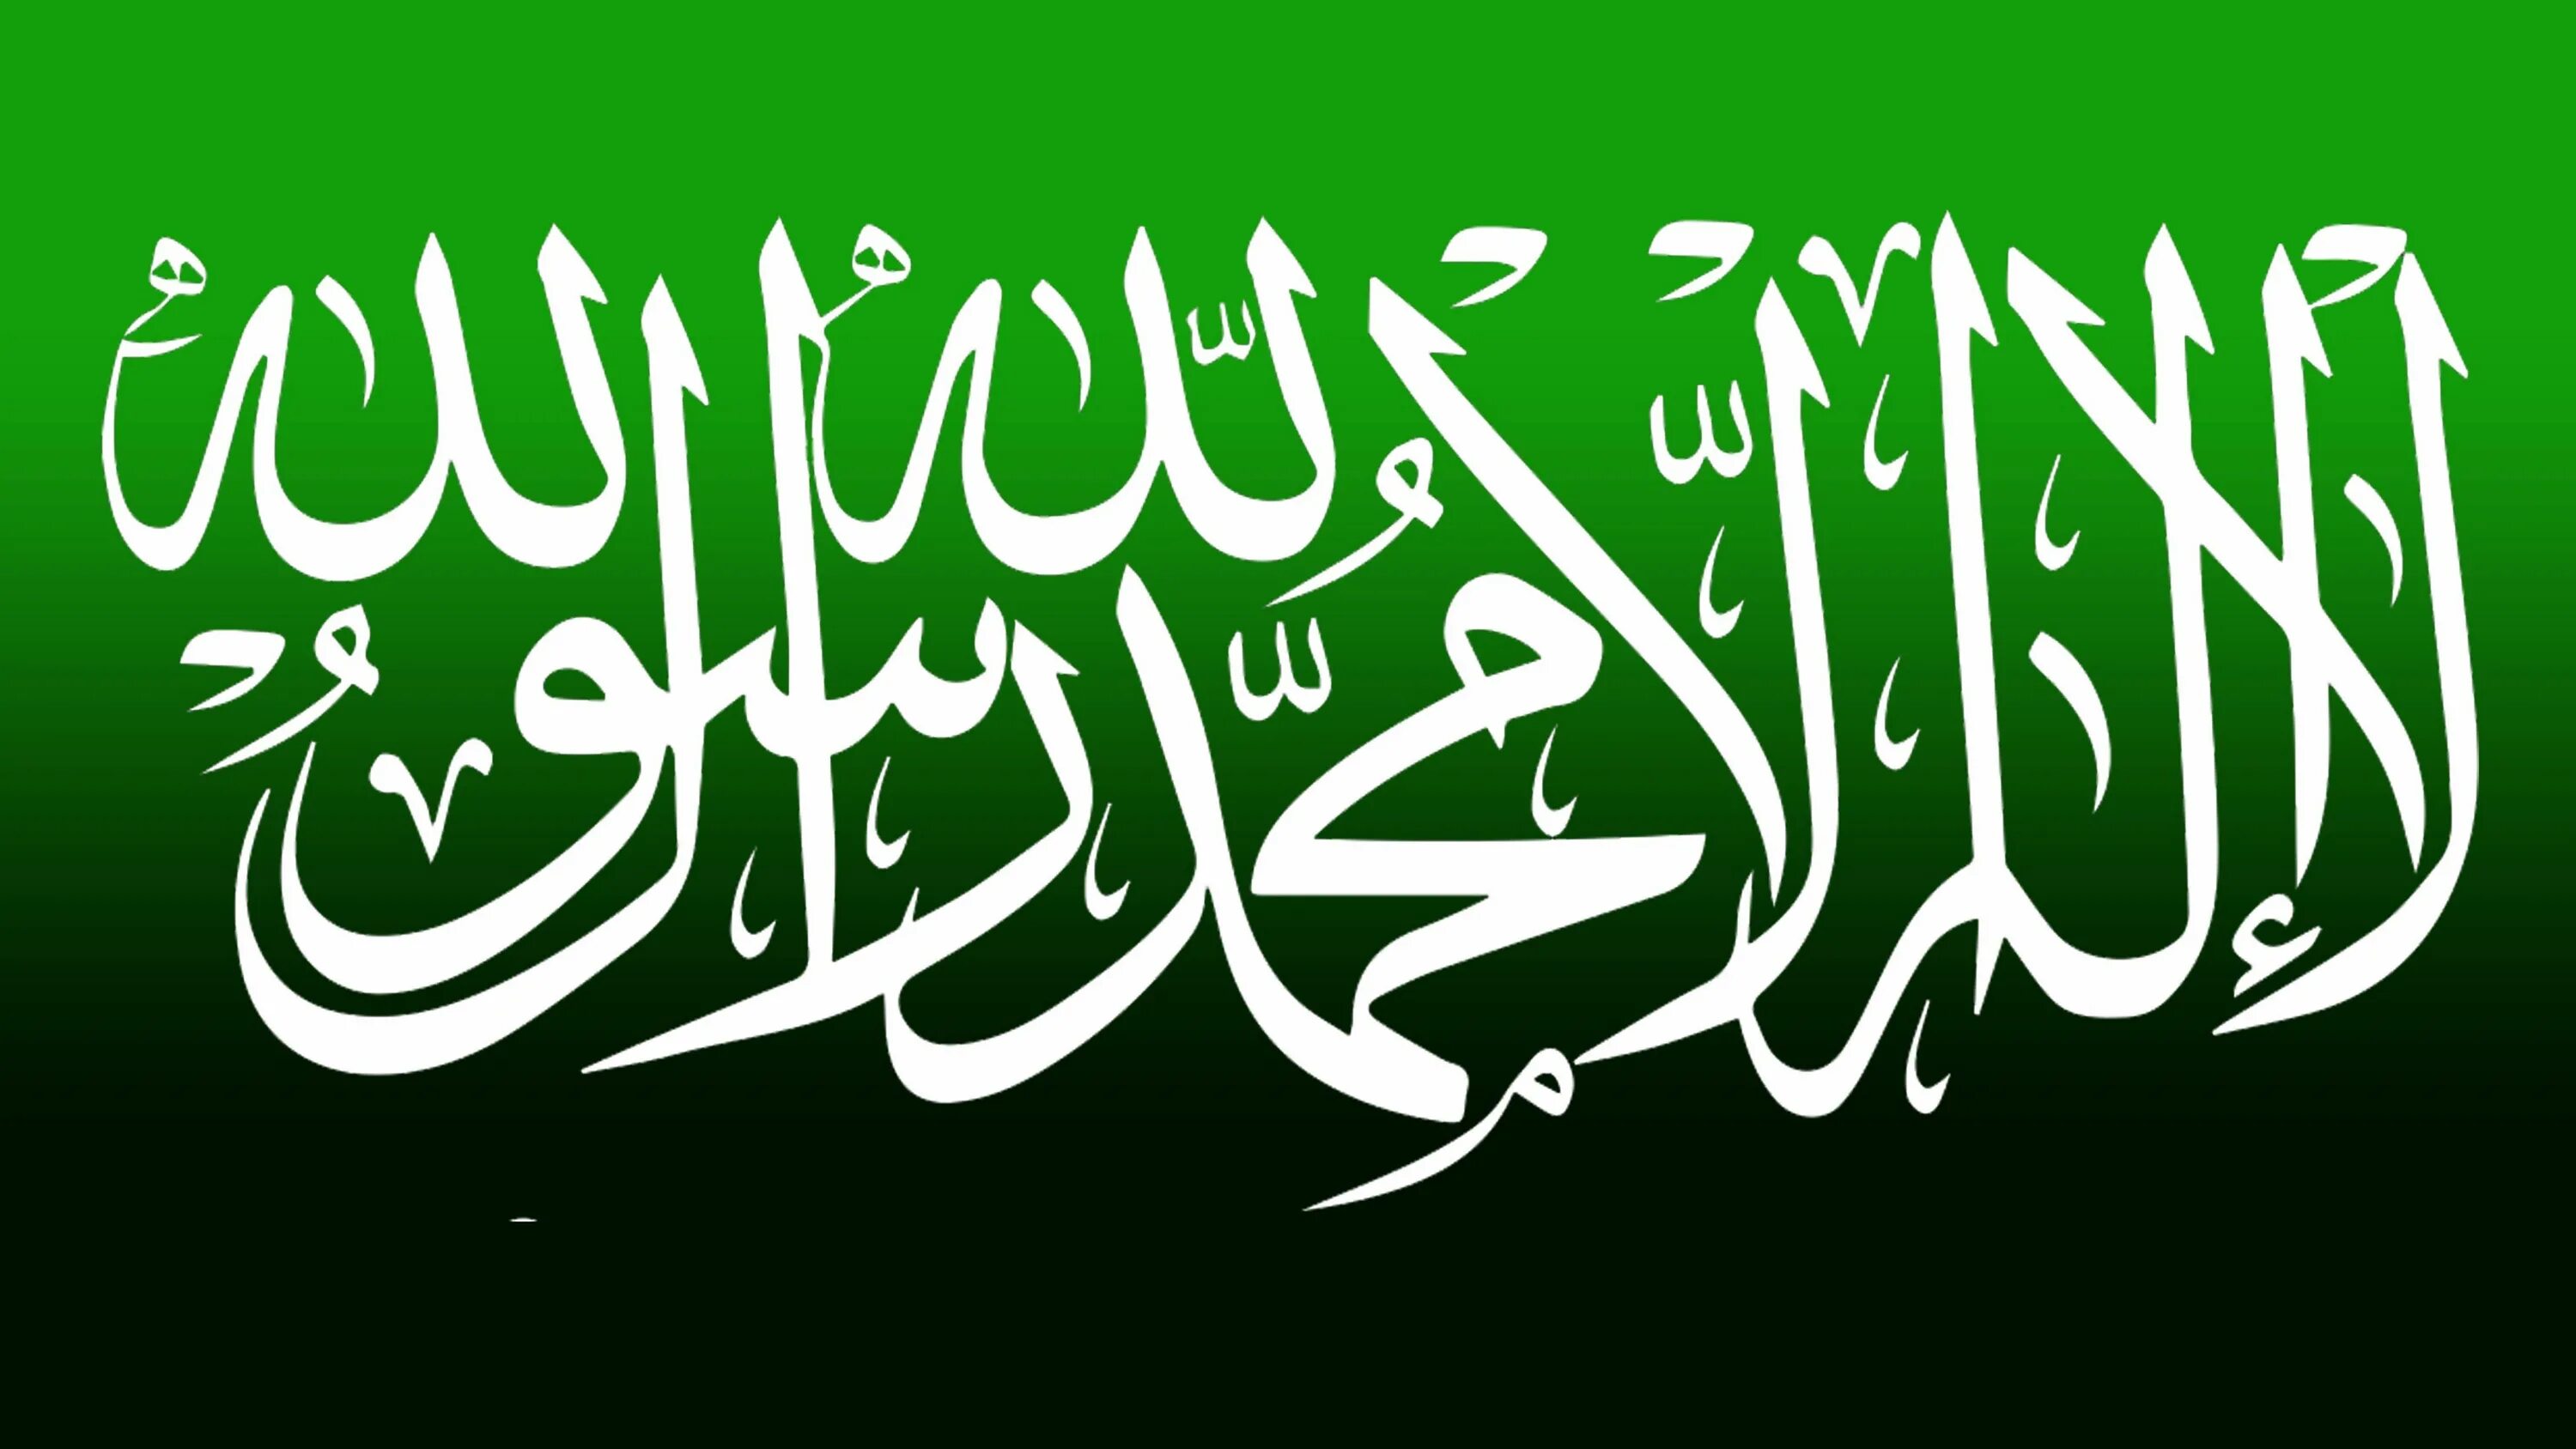 Hasbi rabbi nasheed gym nasheed. Знамя Ислама. Надпись шахада на арабском. Флаг Ислама. Шахада каллиграфия.